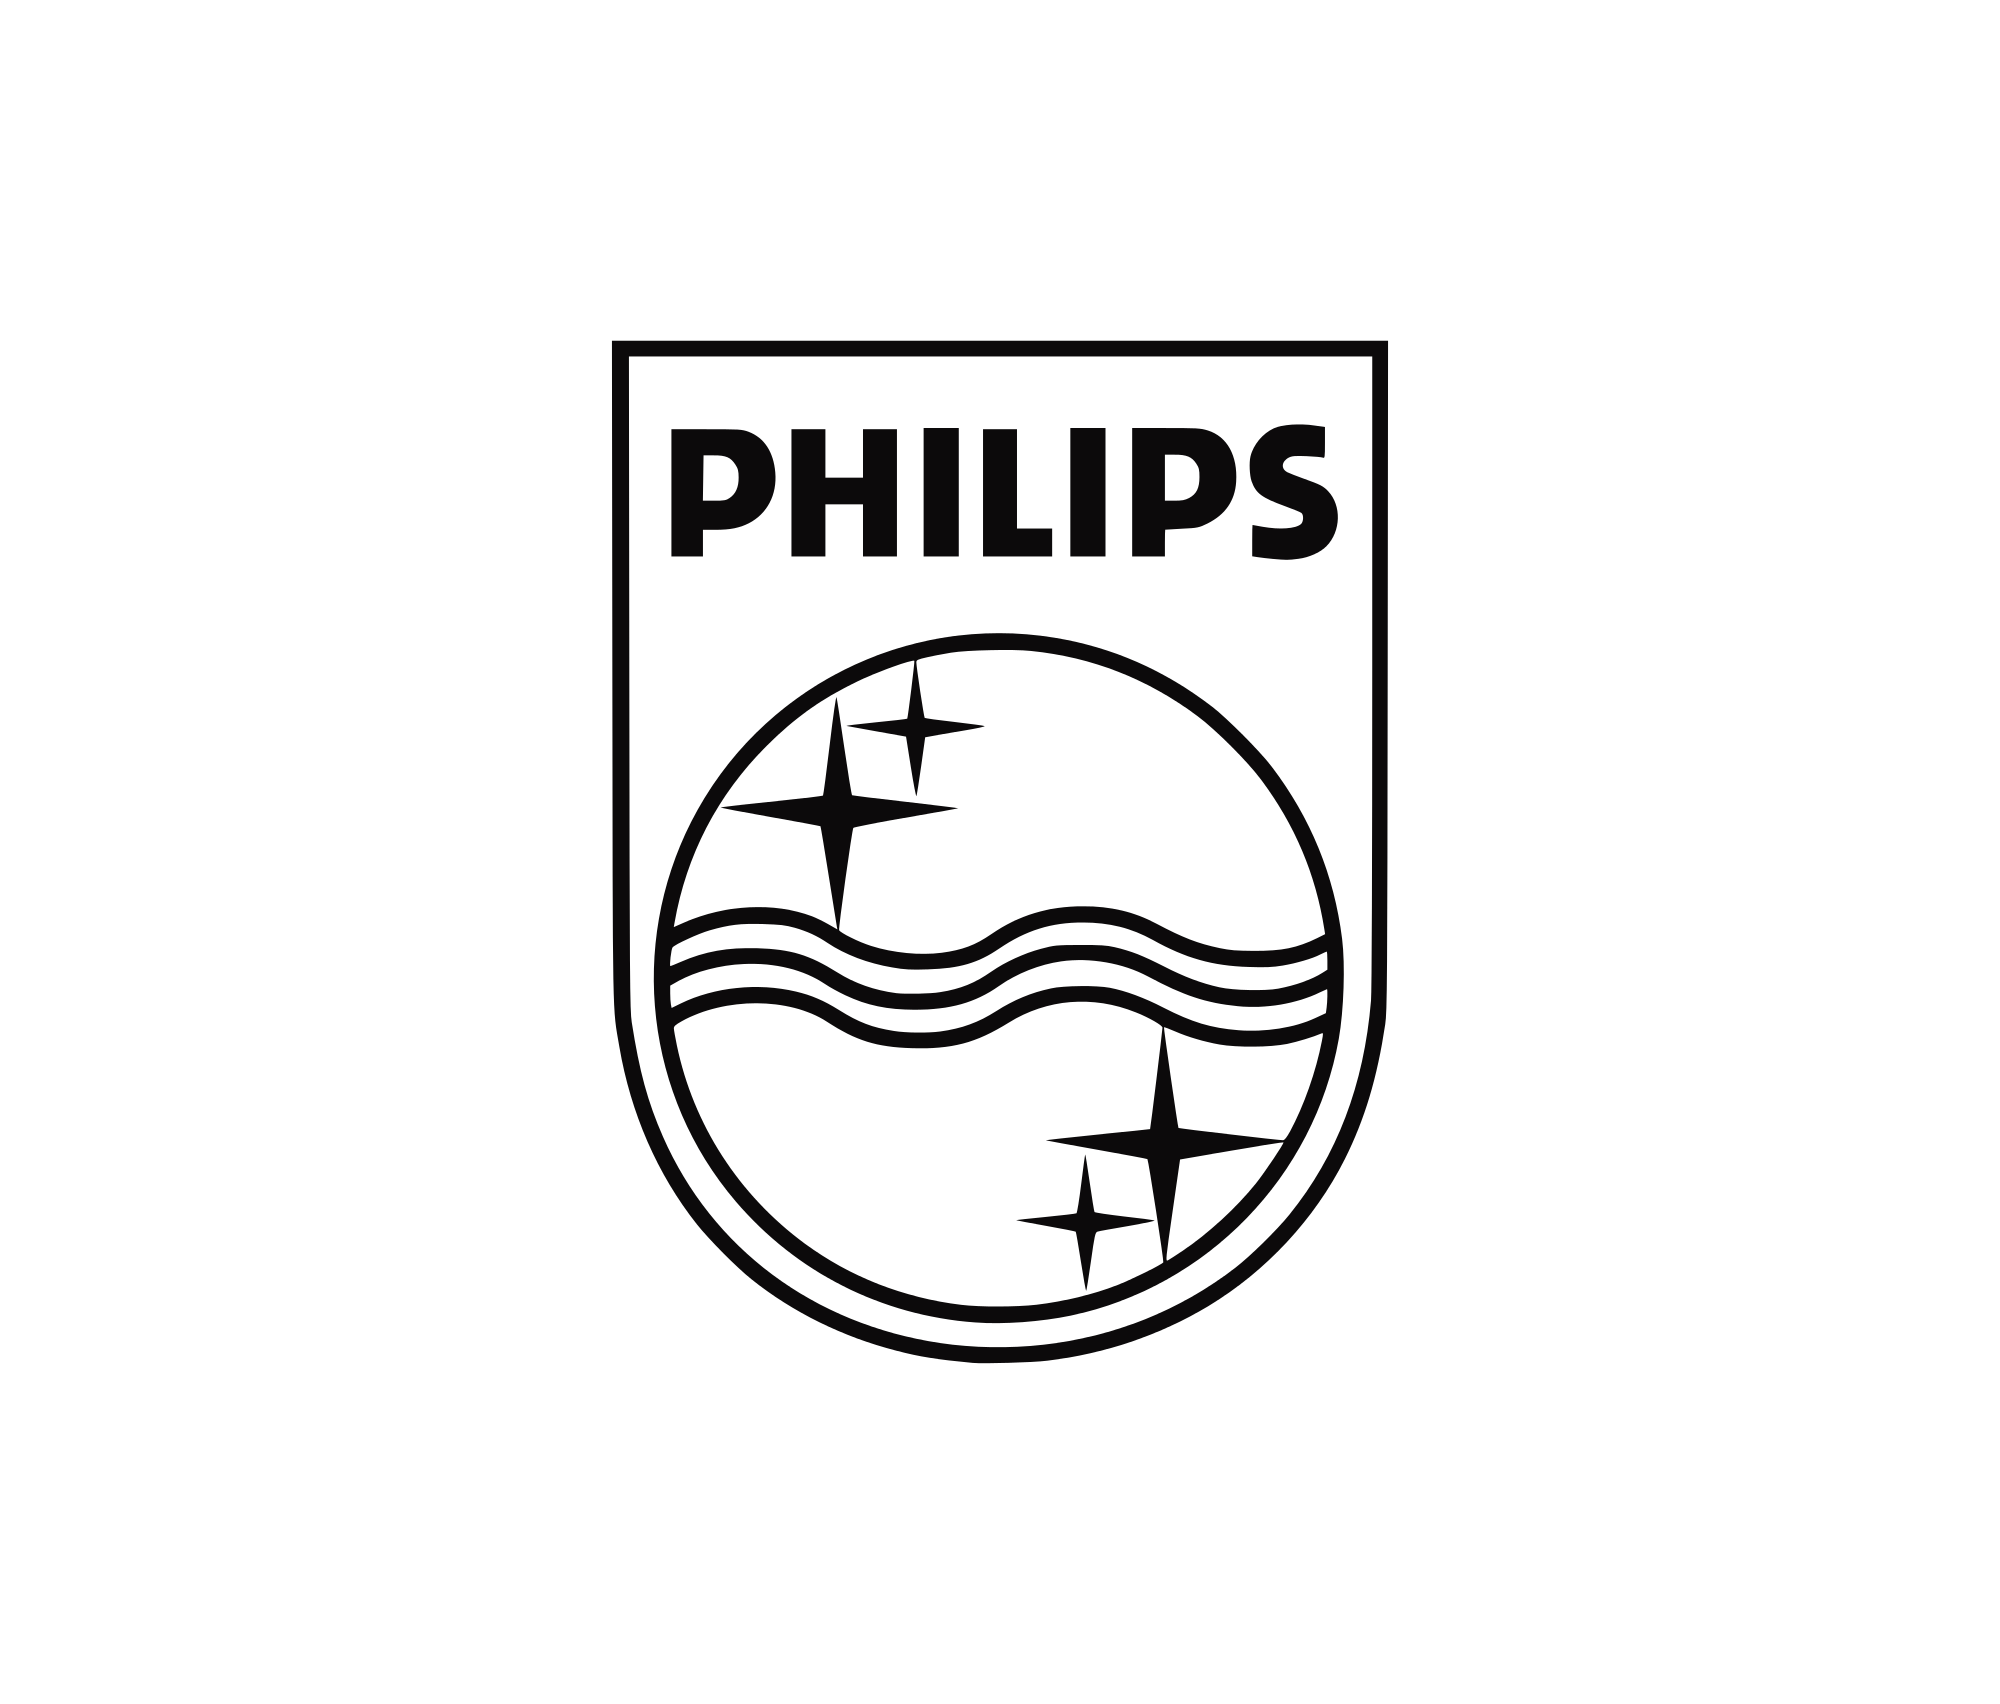 New Philips Shield Logo - Philips logo